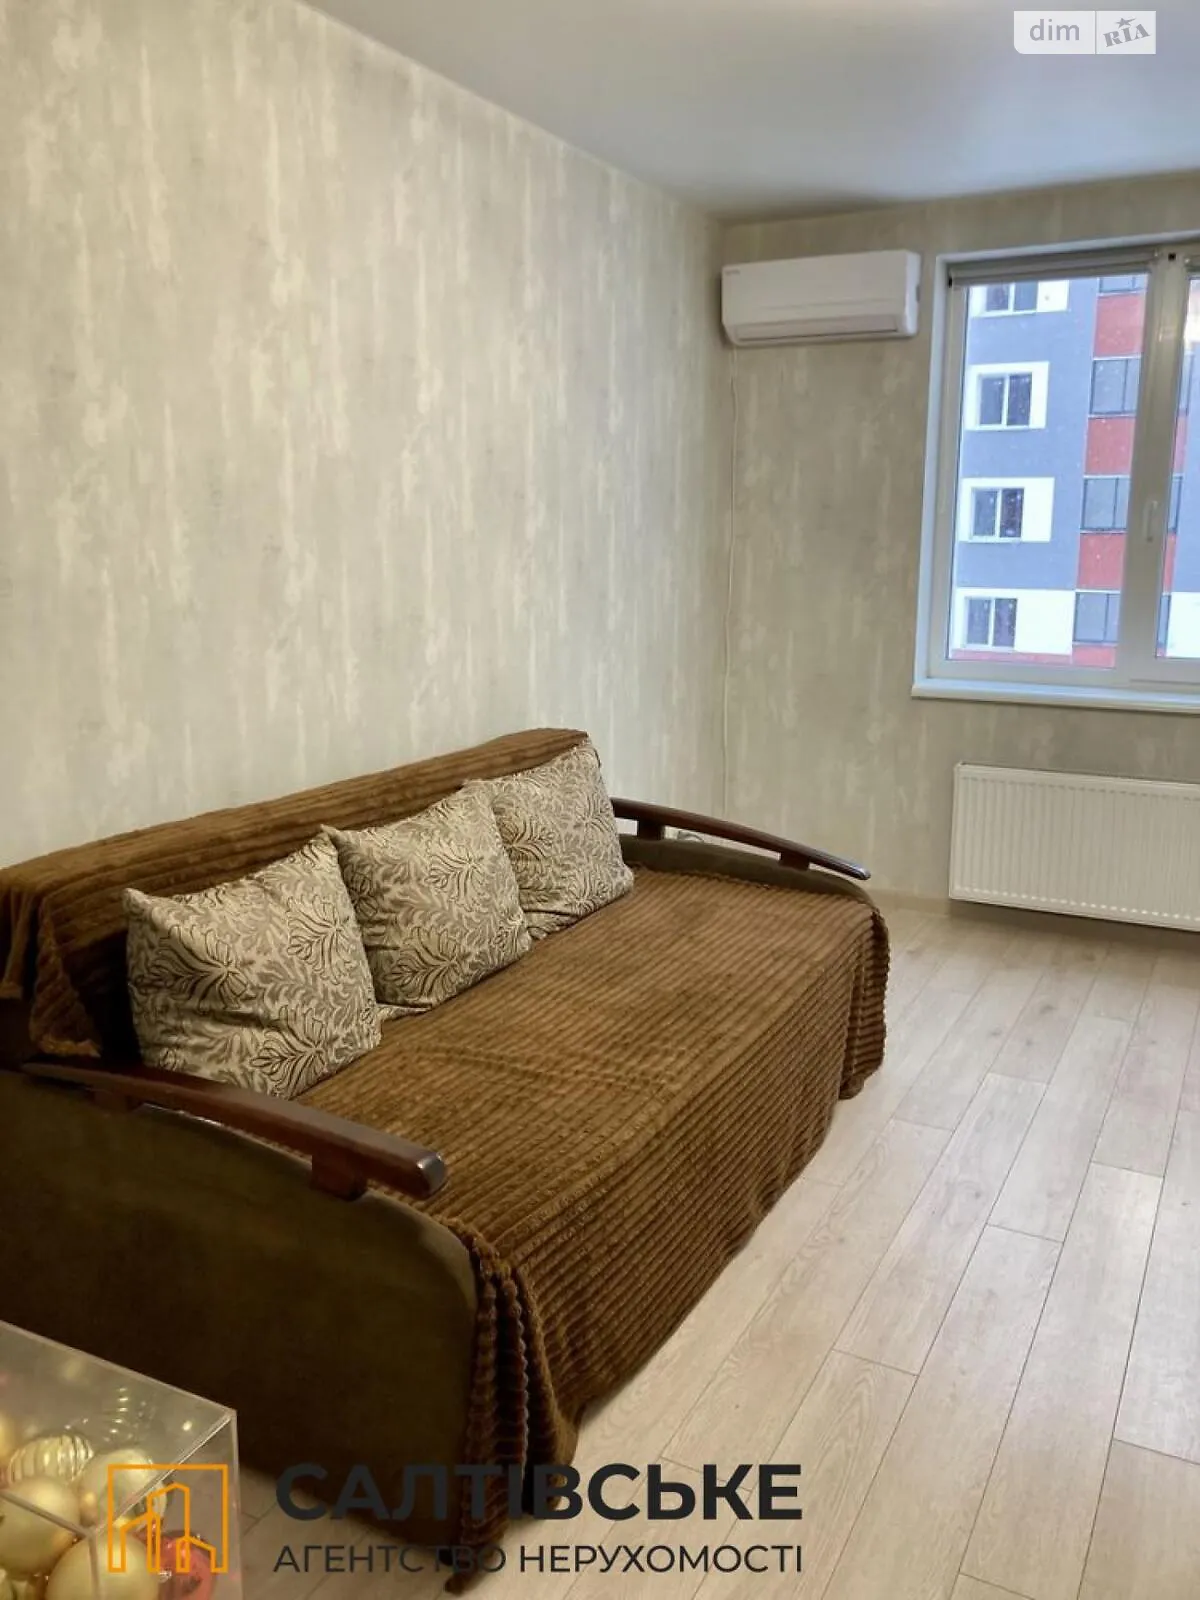 Продается комната 37 кв. м в Харькове - фото 3